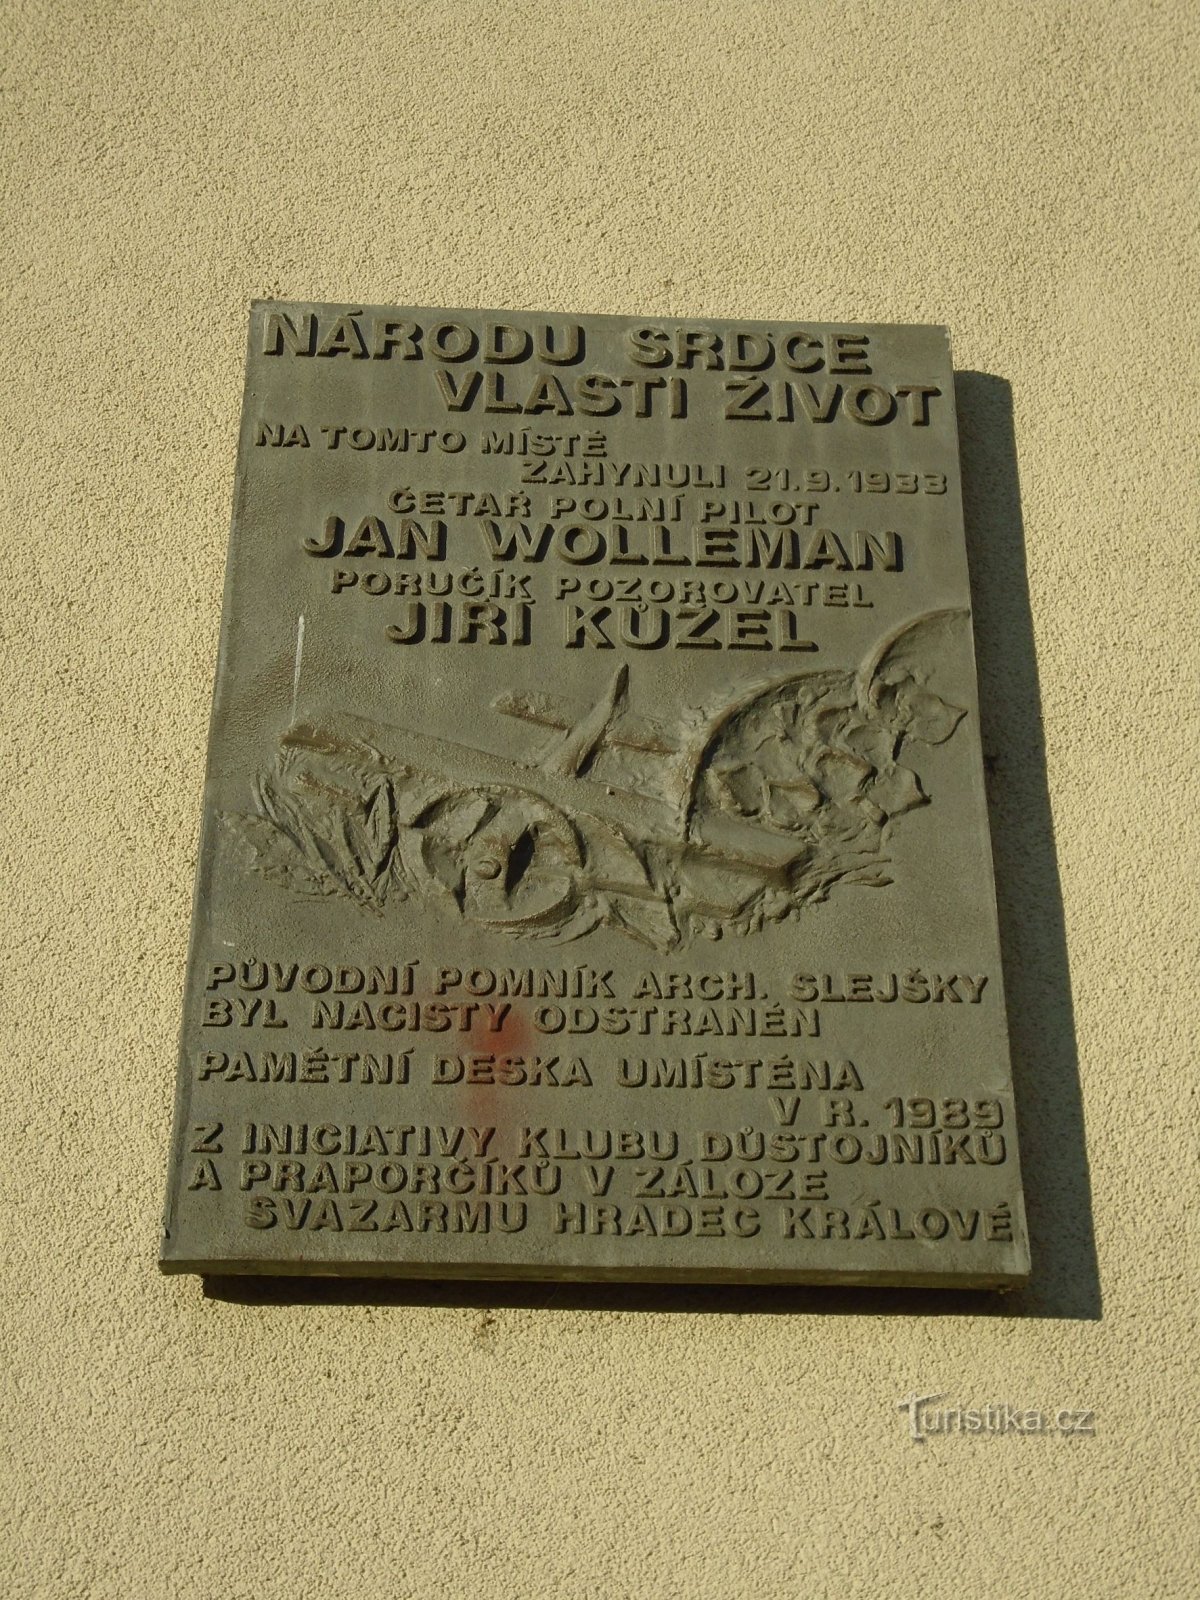 Targa commemorativa degli aviatori caduti (Hradec Králové, 10.12.2017/XNUMX/XNUMX)